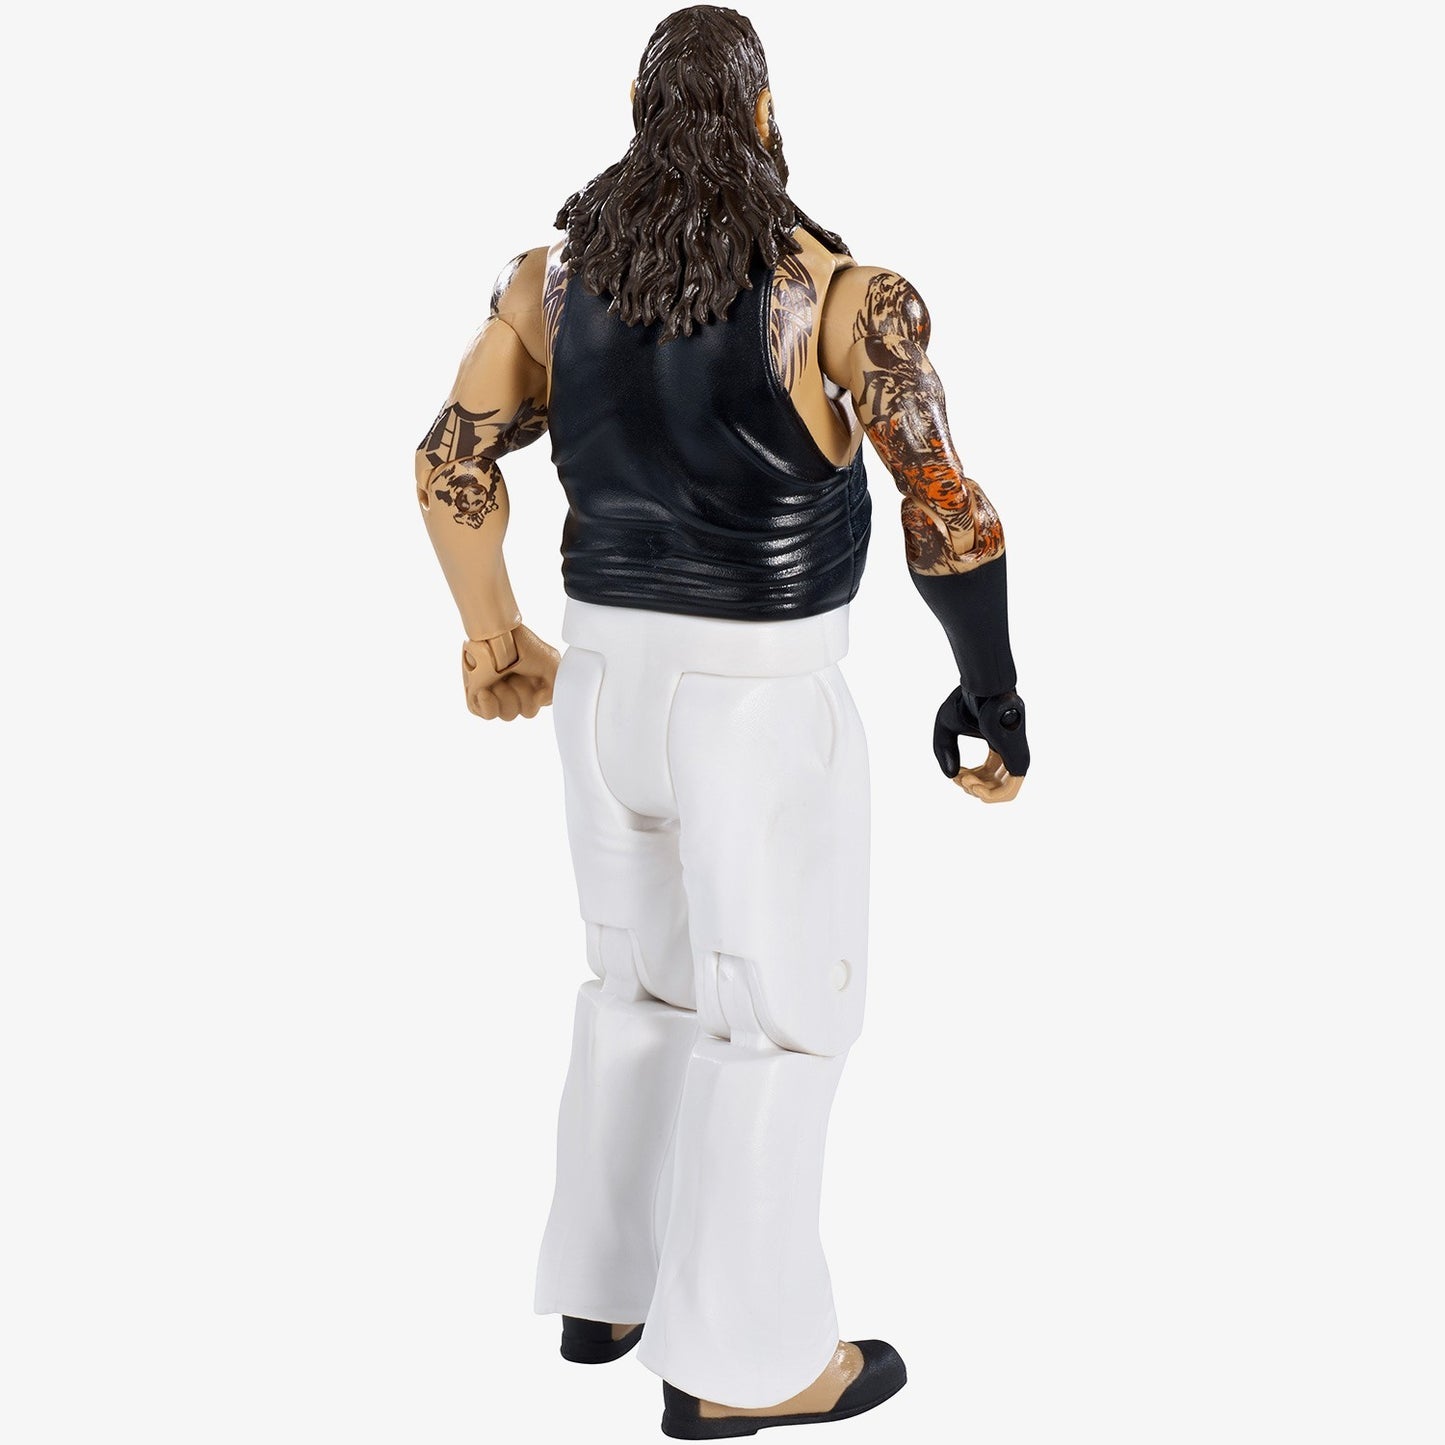 Bray Wyatt - WWE Basic Series #49